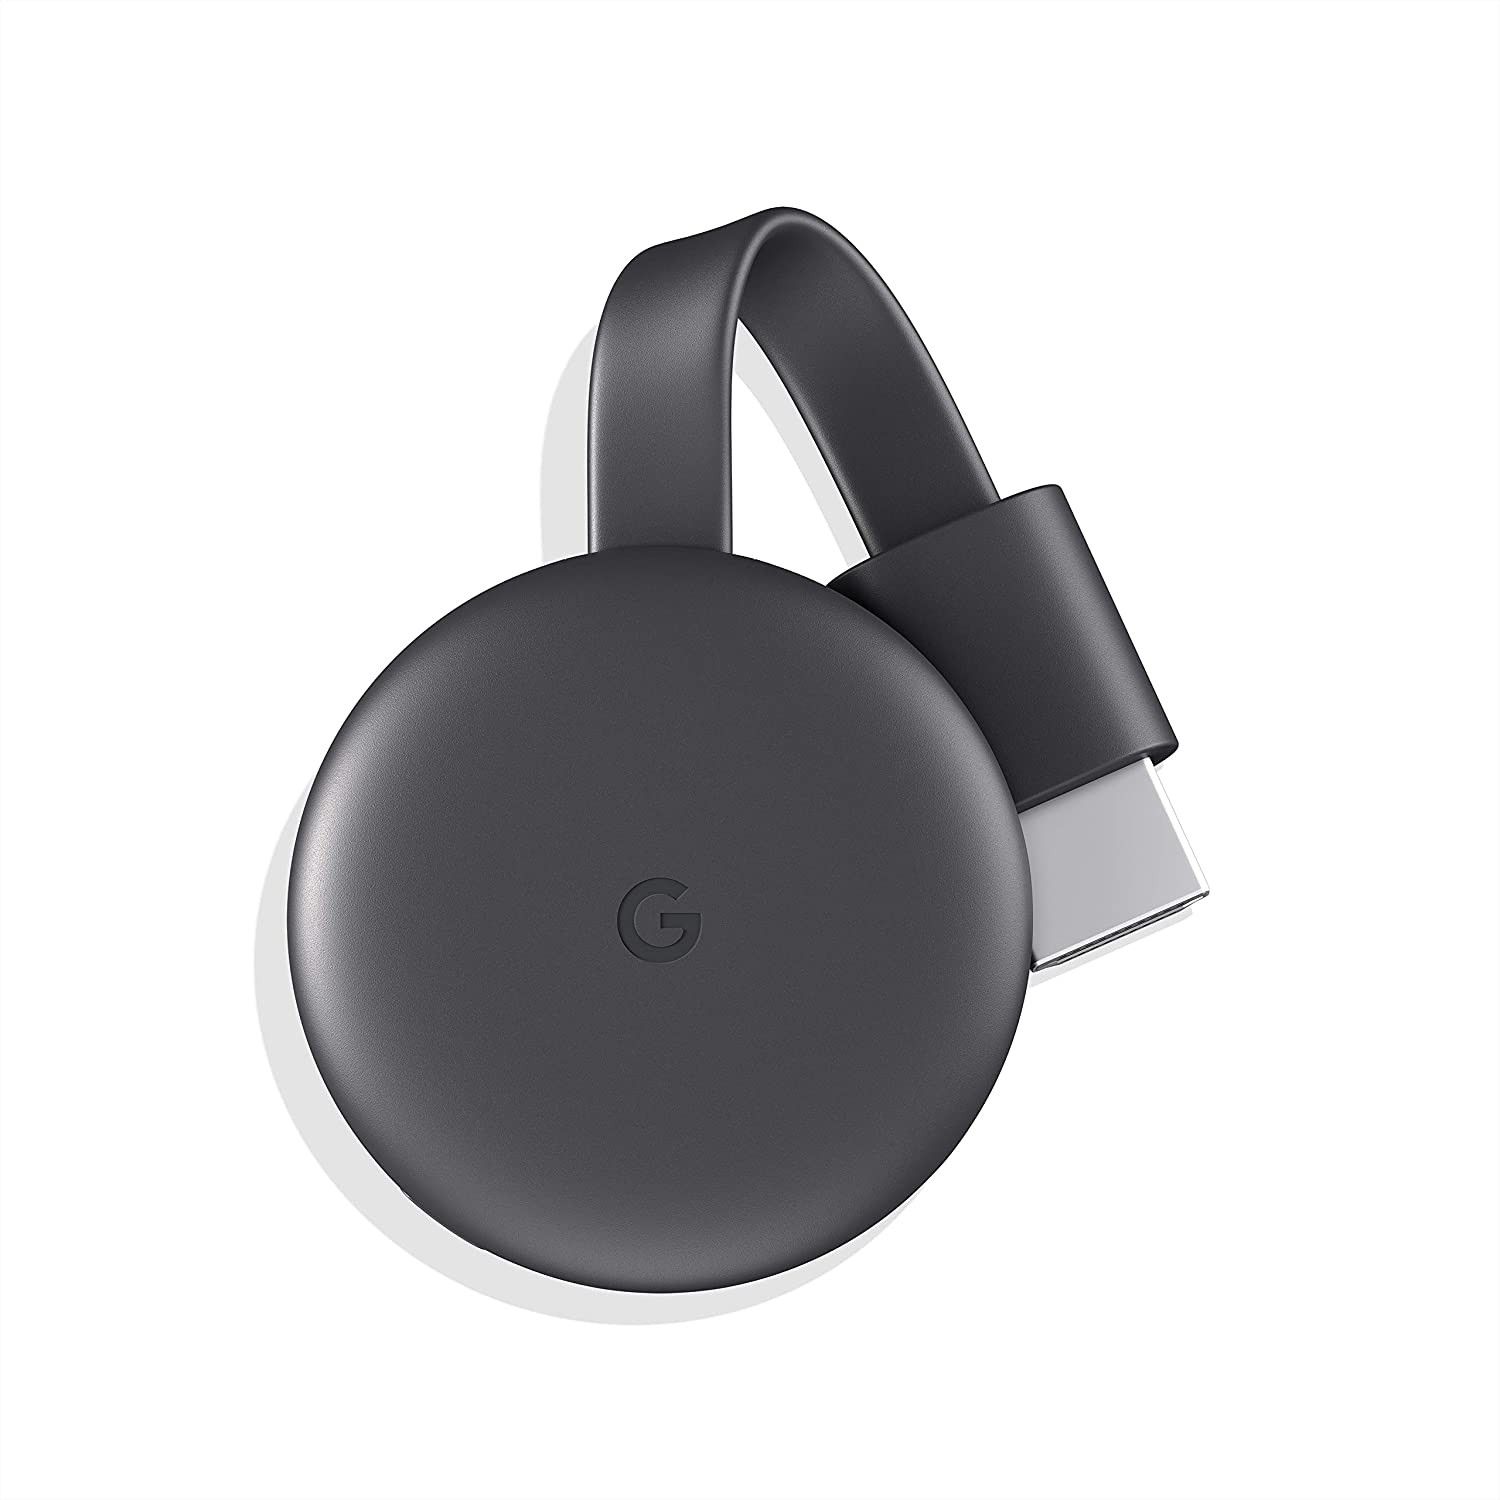 Google Chromecast (3rd Generation) BRAND NEW!